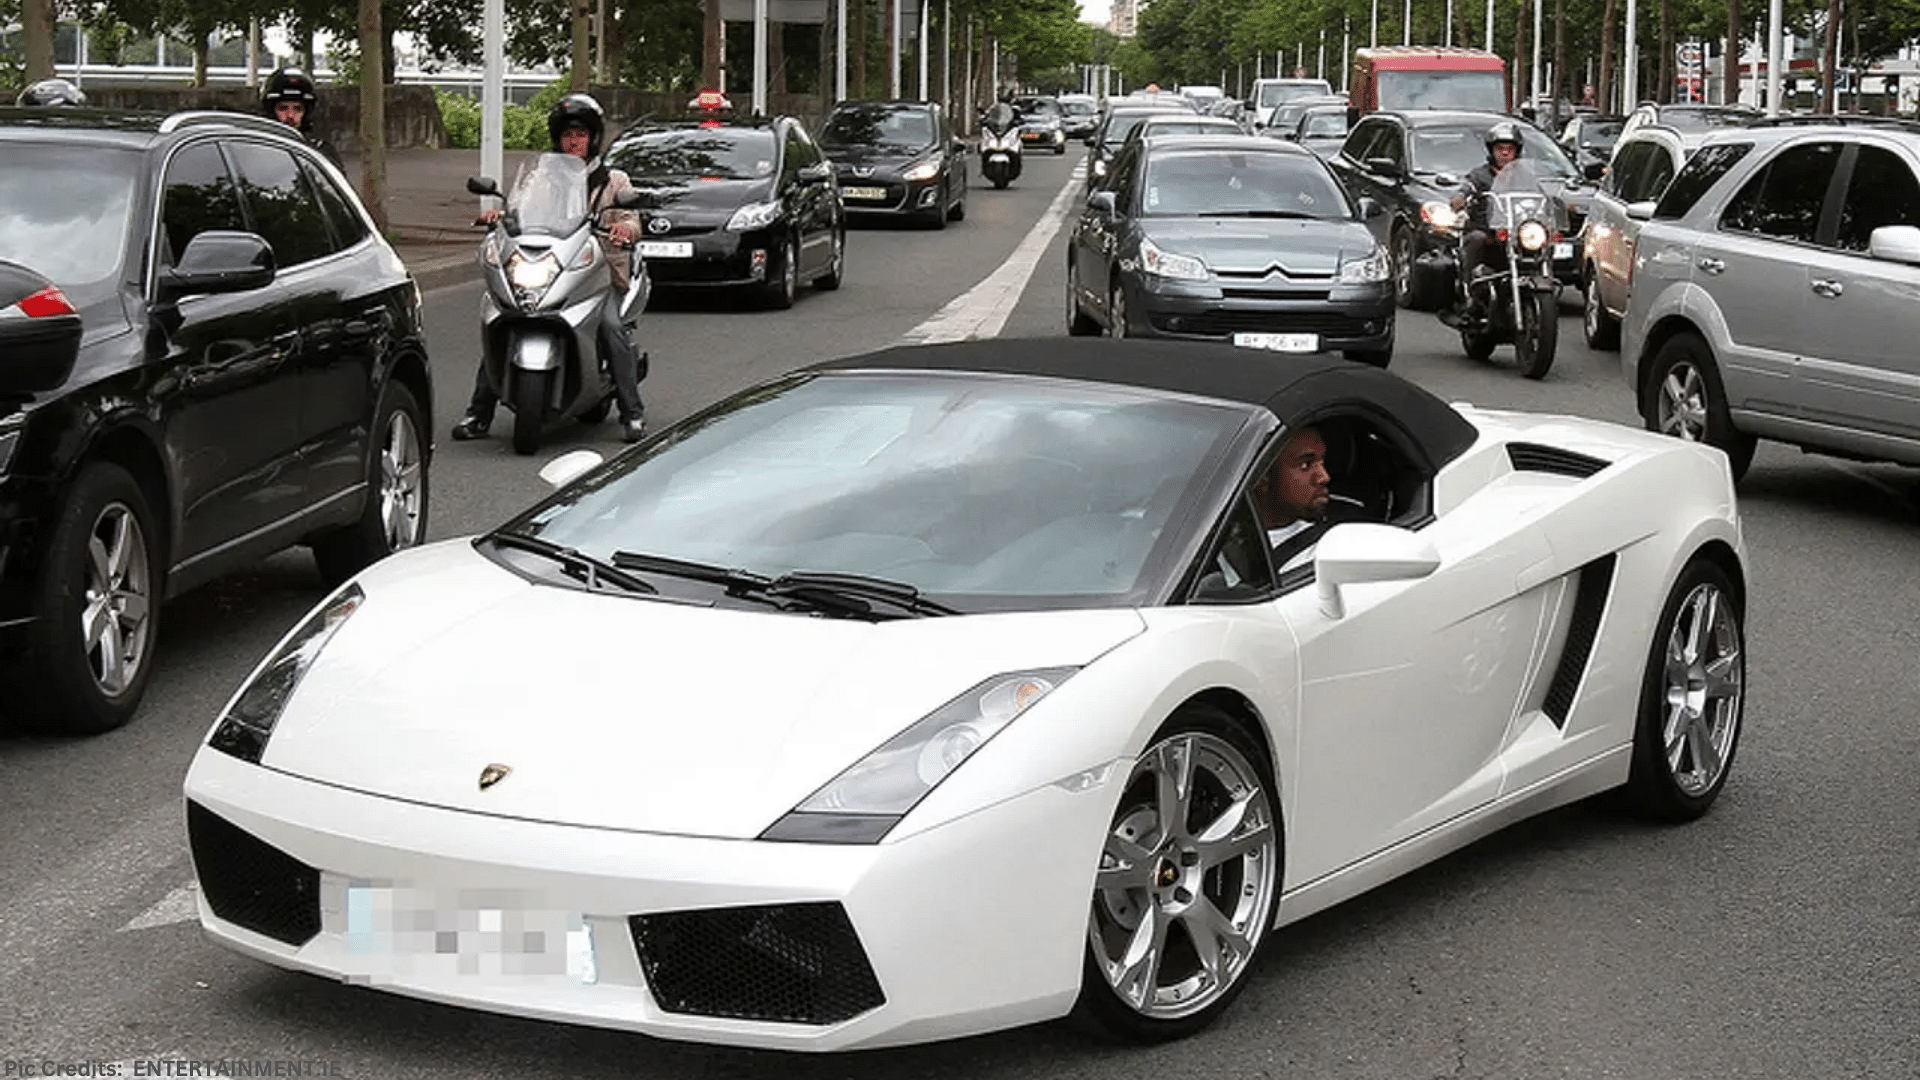 Kanye West's Lamborghini Gallardo Spyder